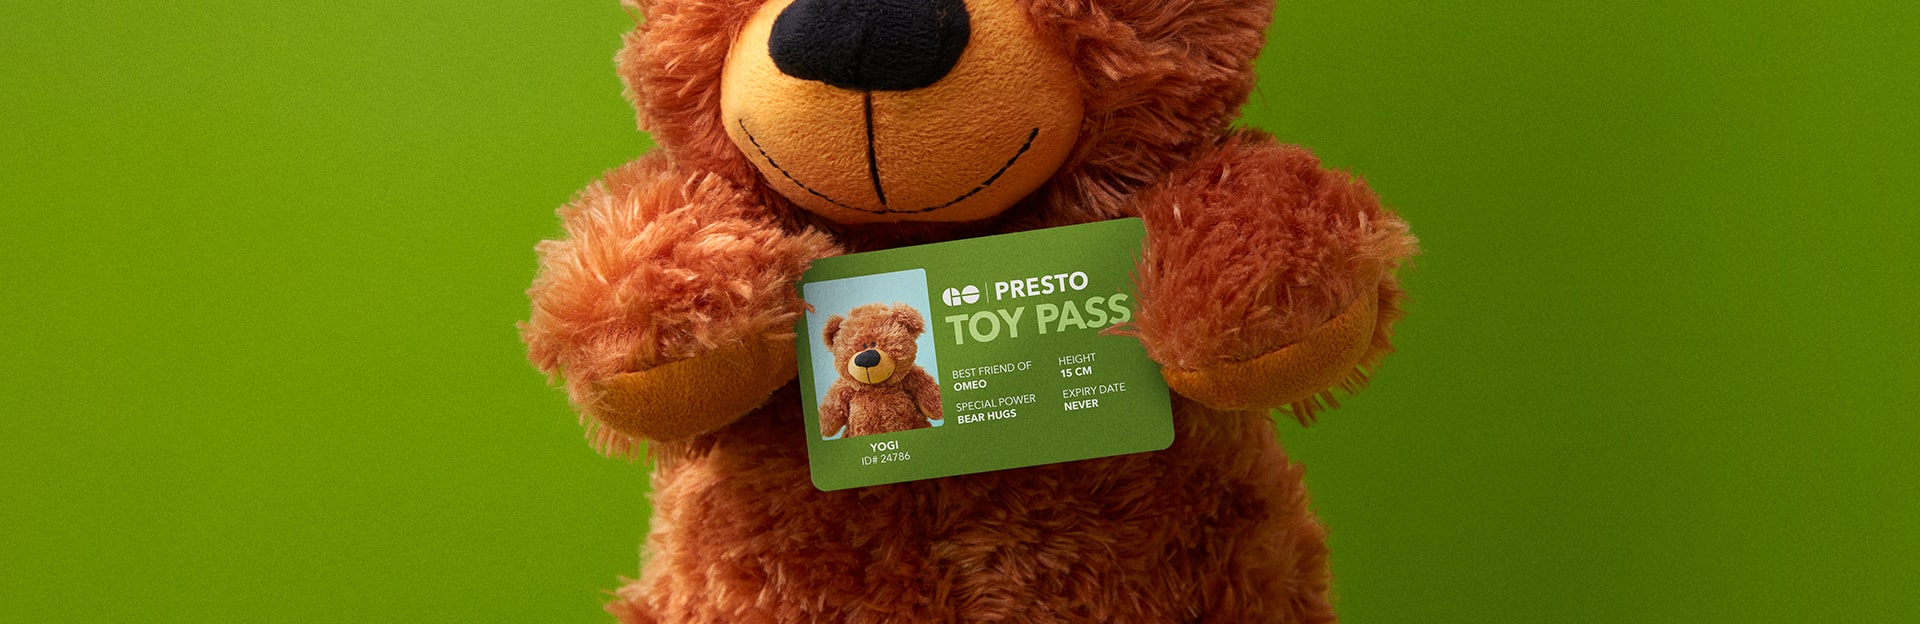 Teddy Bear holding new GO Toy Pass